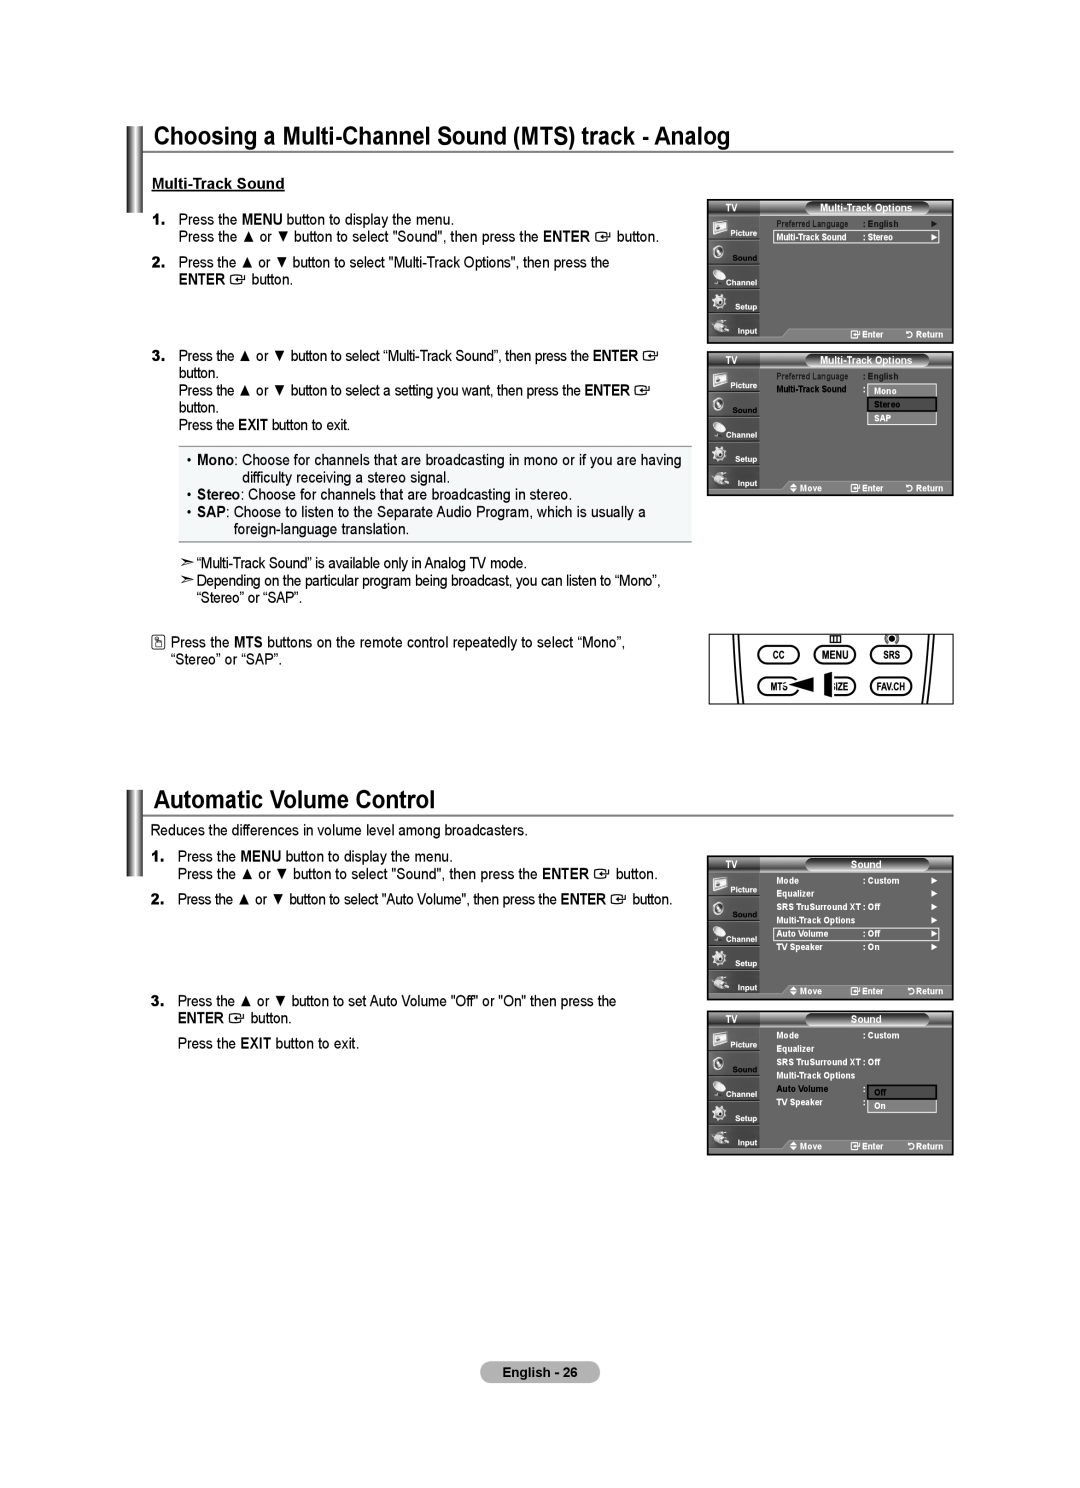 Samsung LN22A0J1D, LN22A330 Choosing a Multi-Channel Sound MTS track - Analog, Automatic Volume Control, Multi-Track Sound 